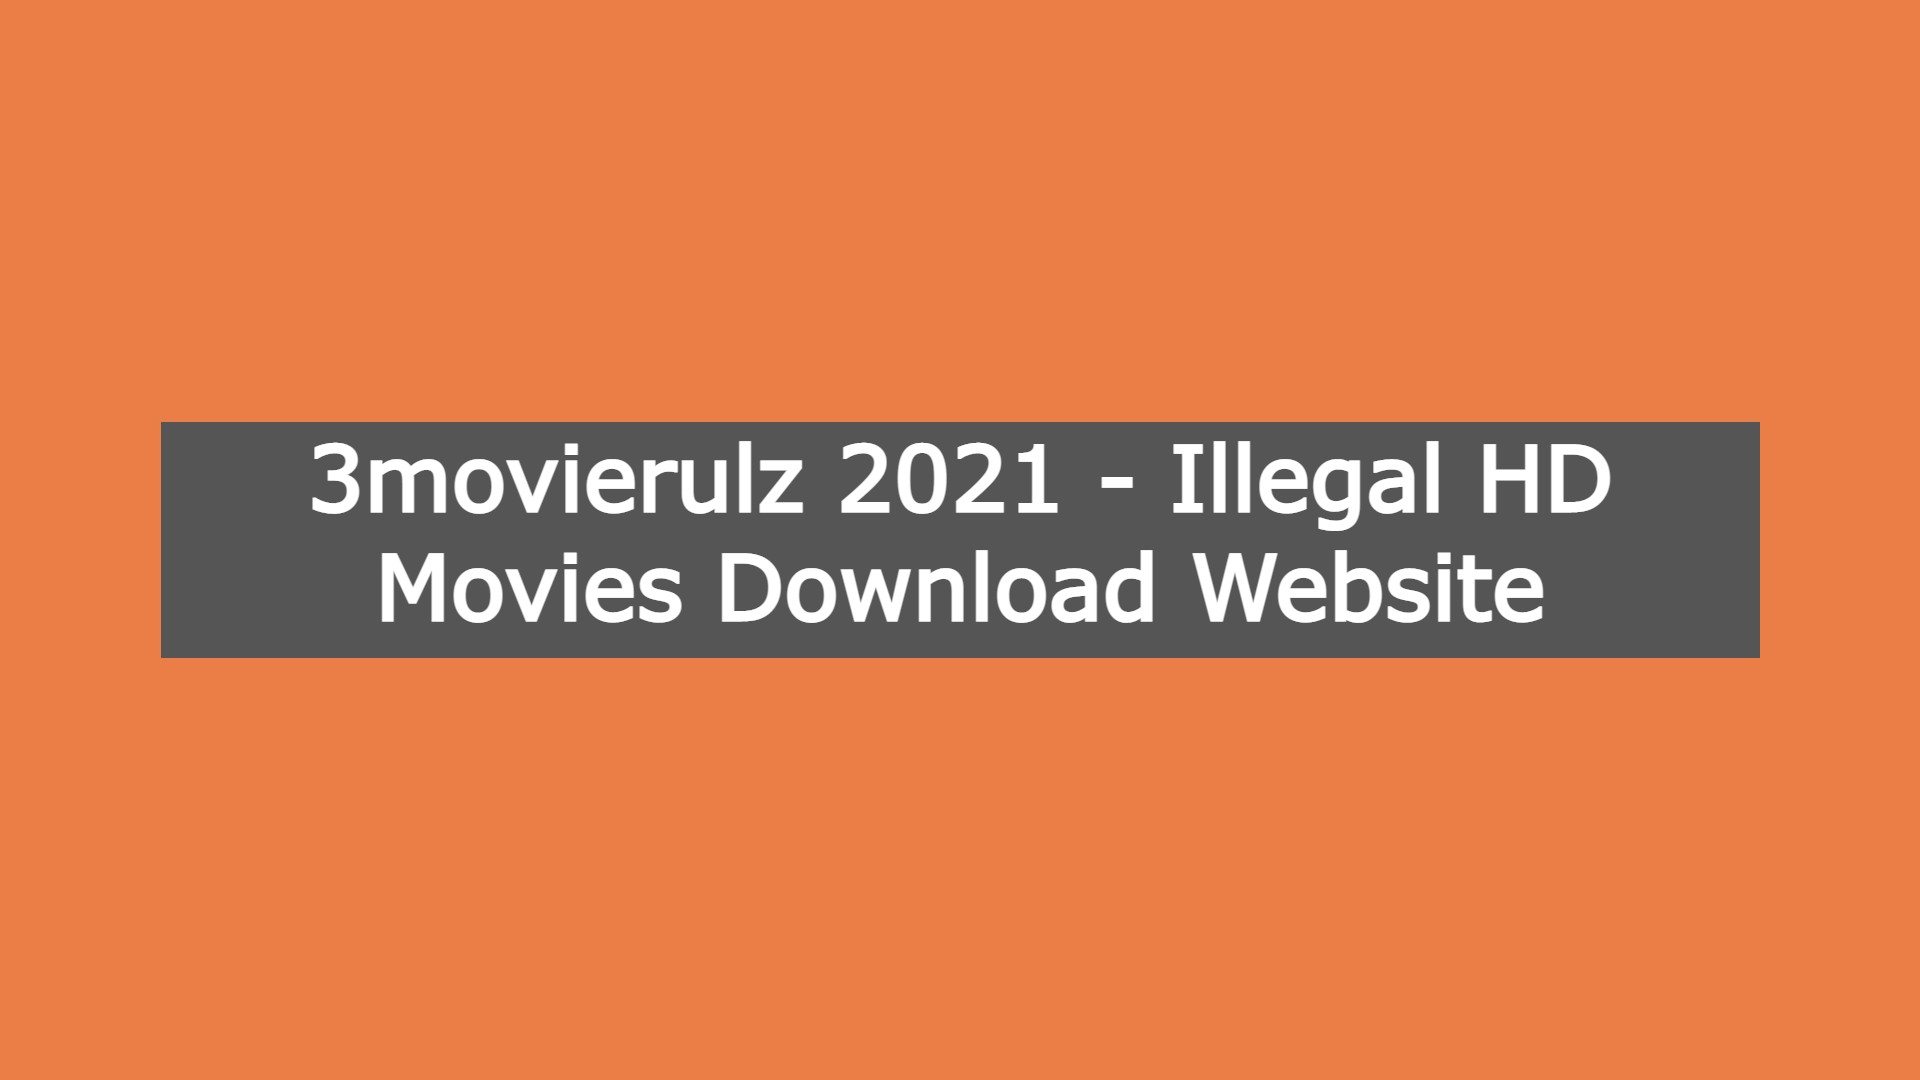 3movierulz 2021 - Illegal HD Movies Download Website